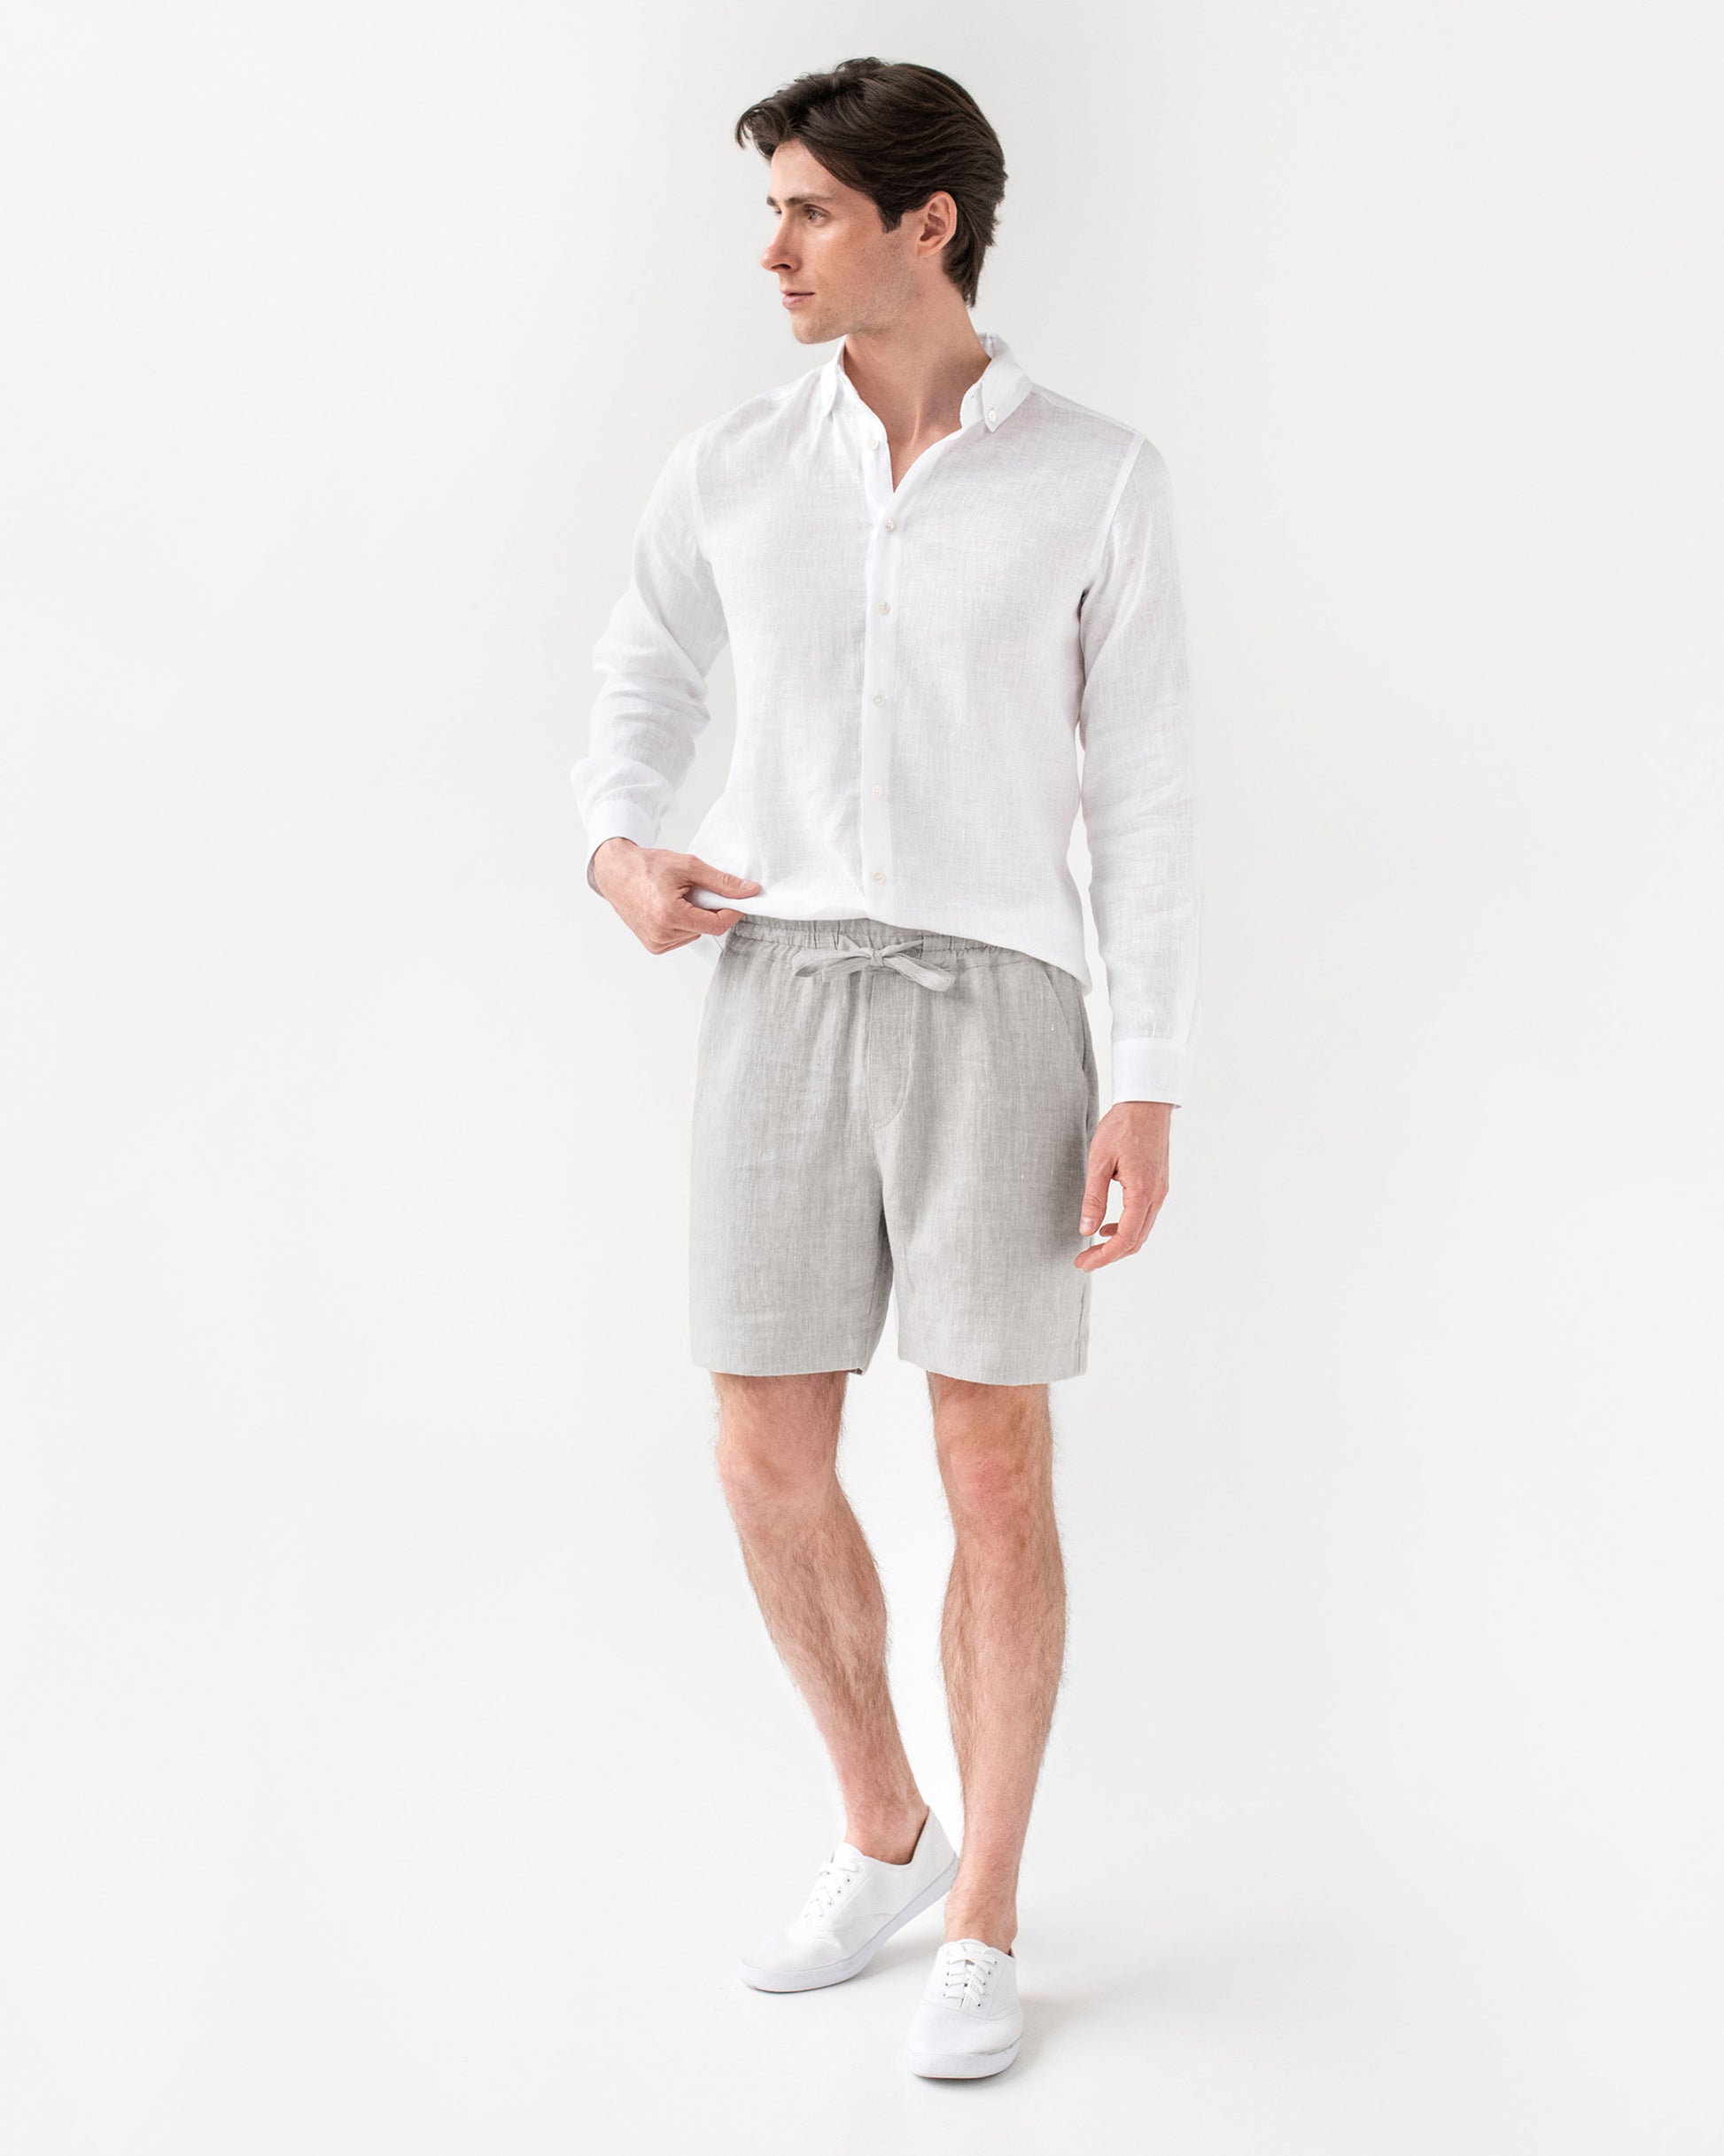 Men's linen shorts STOWE in Gray melange - MagicLinen